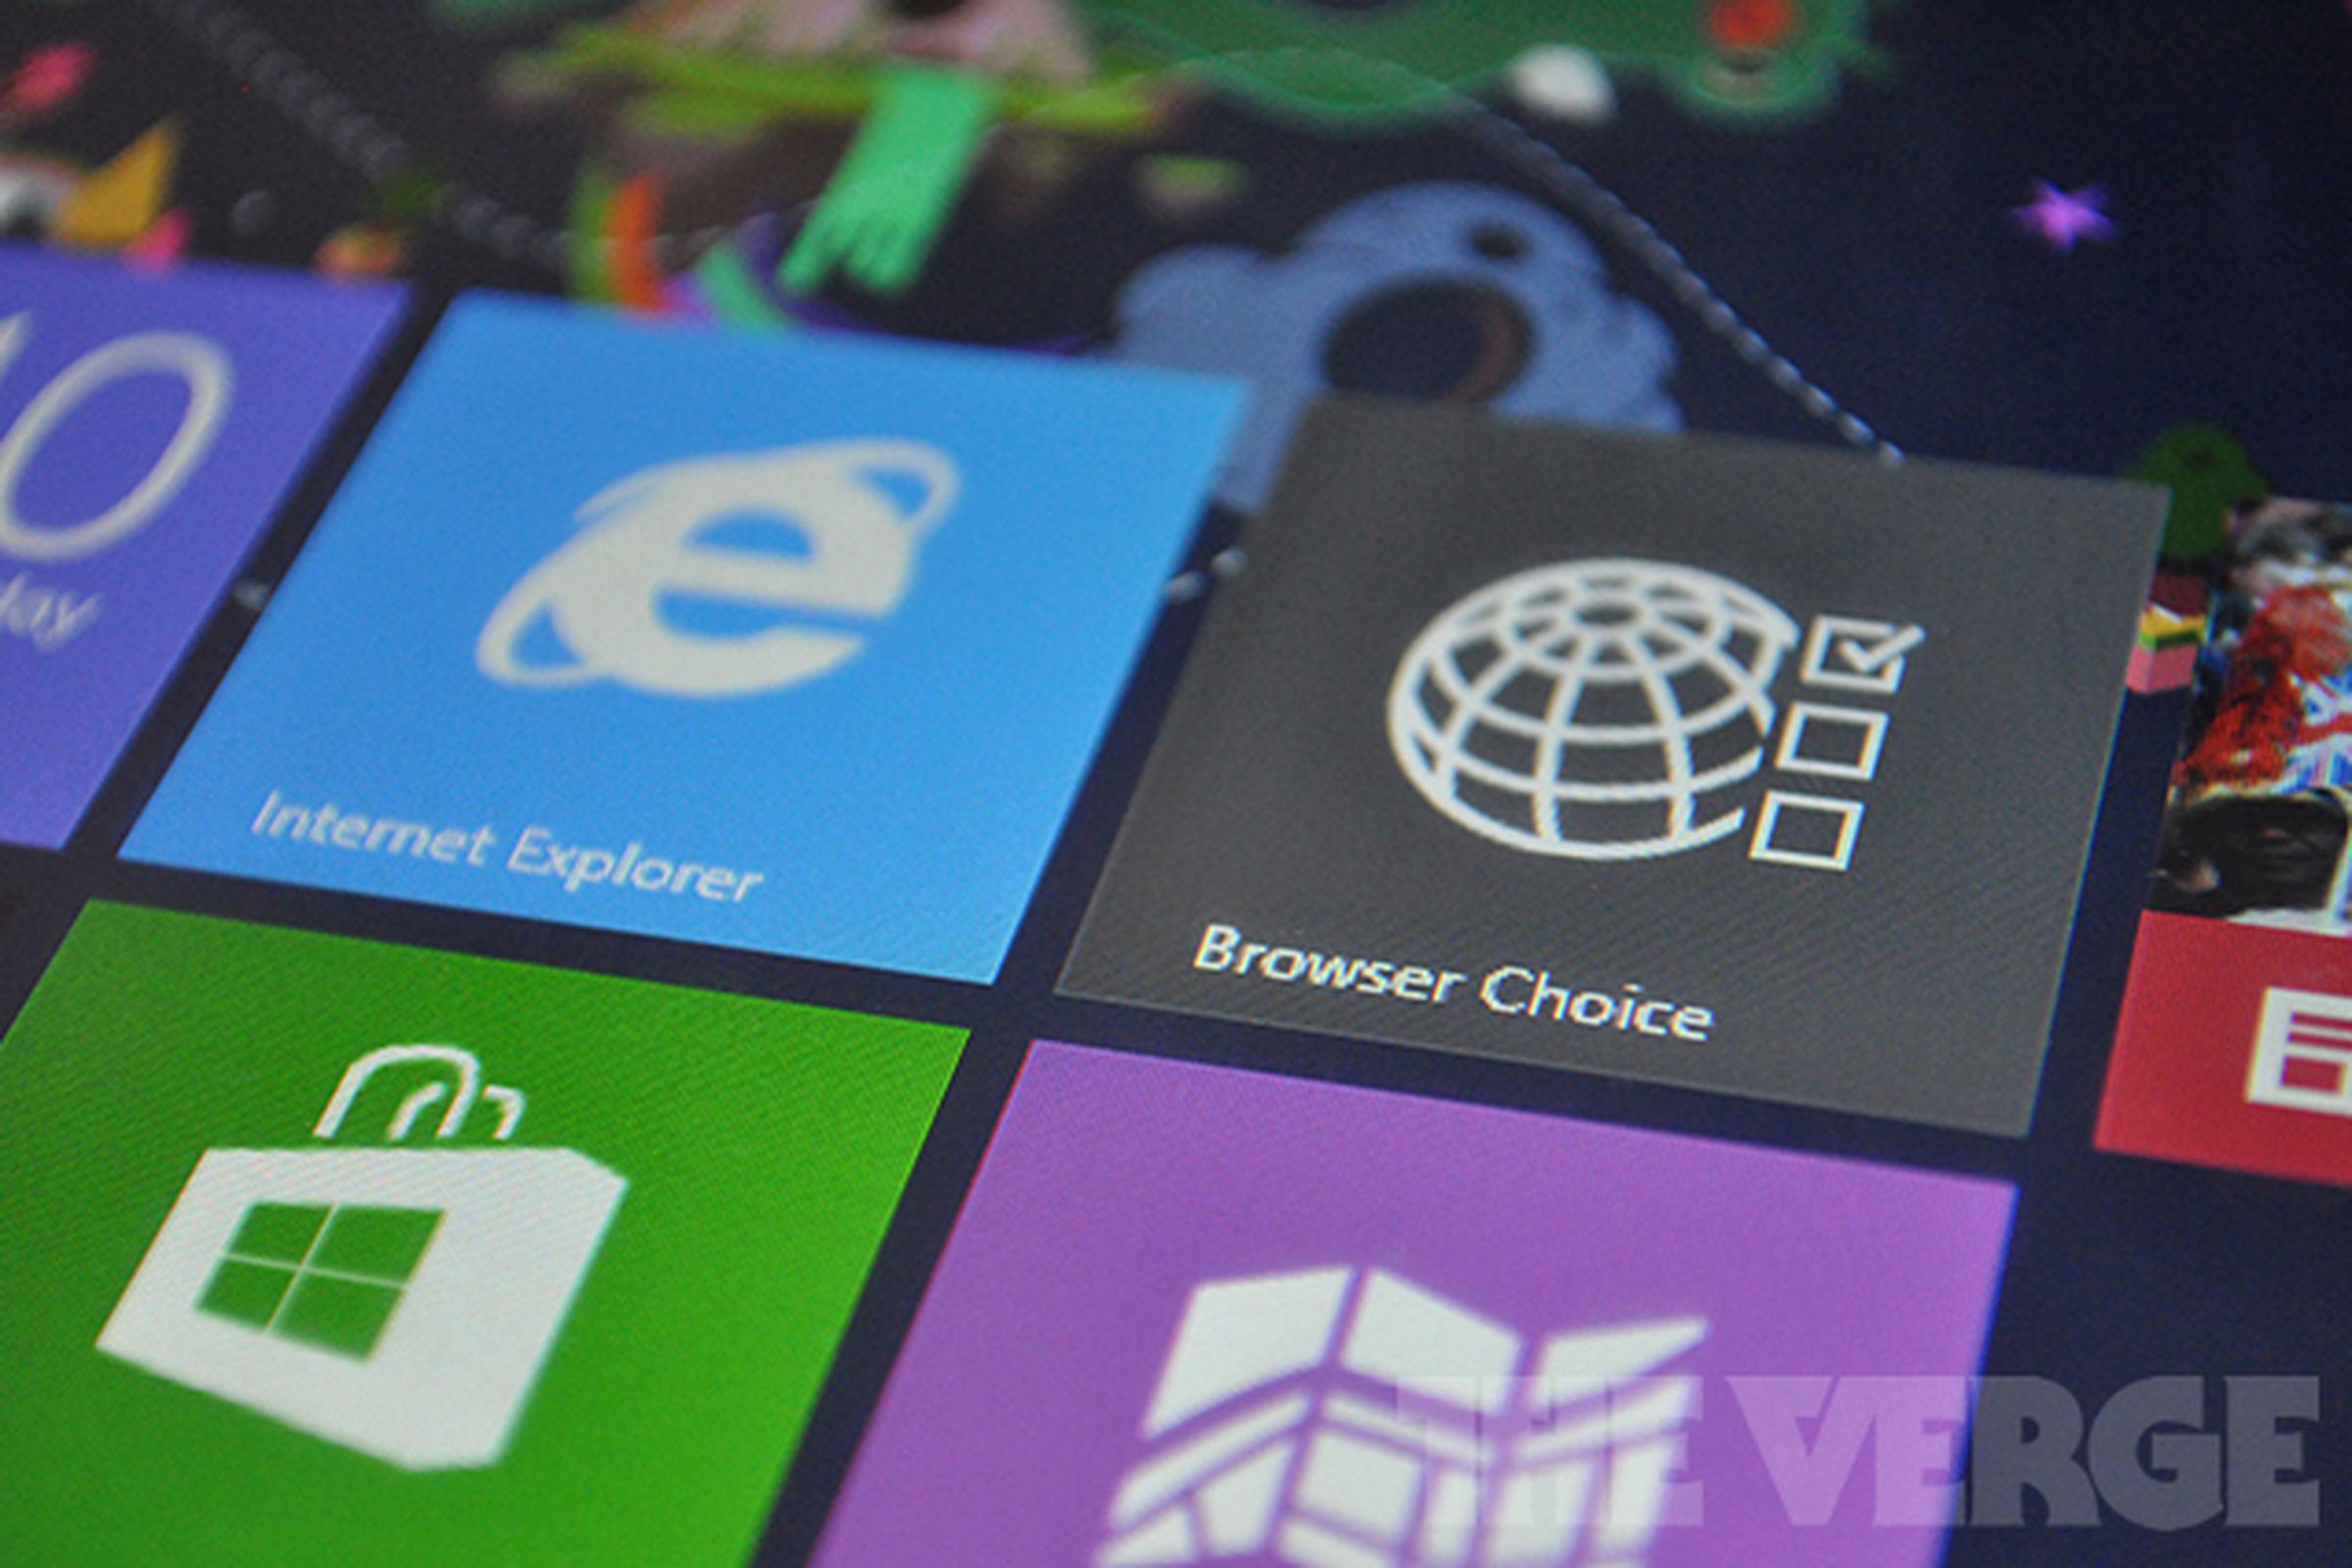 Windows 8 browser choice